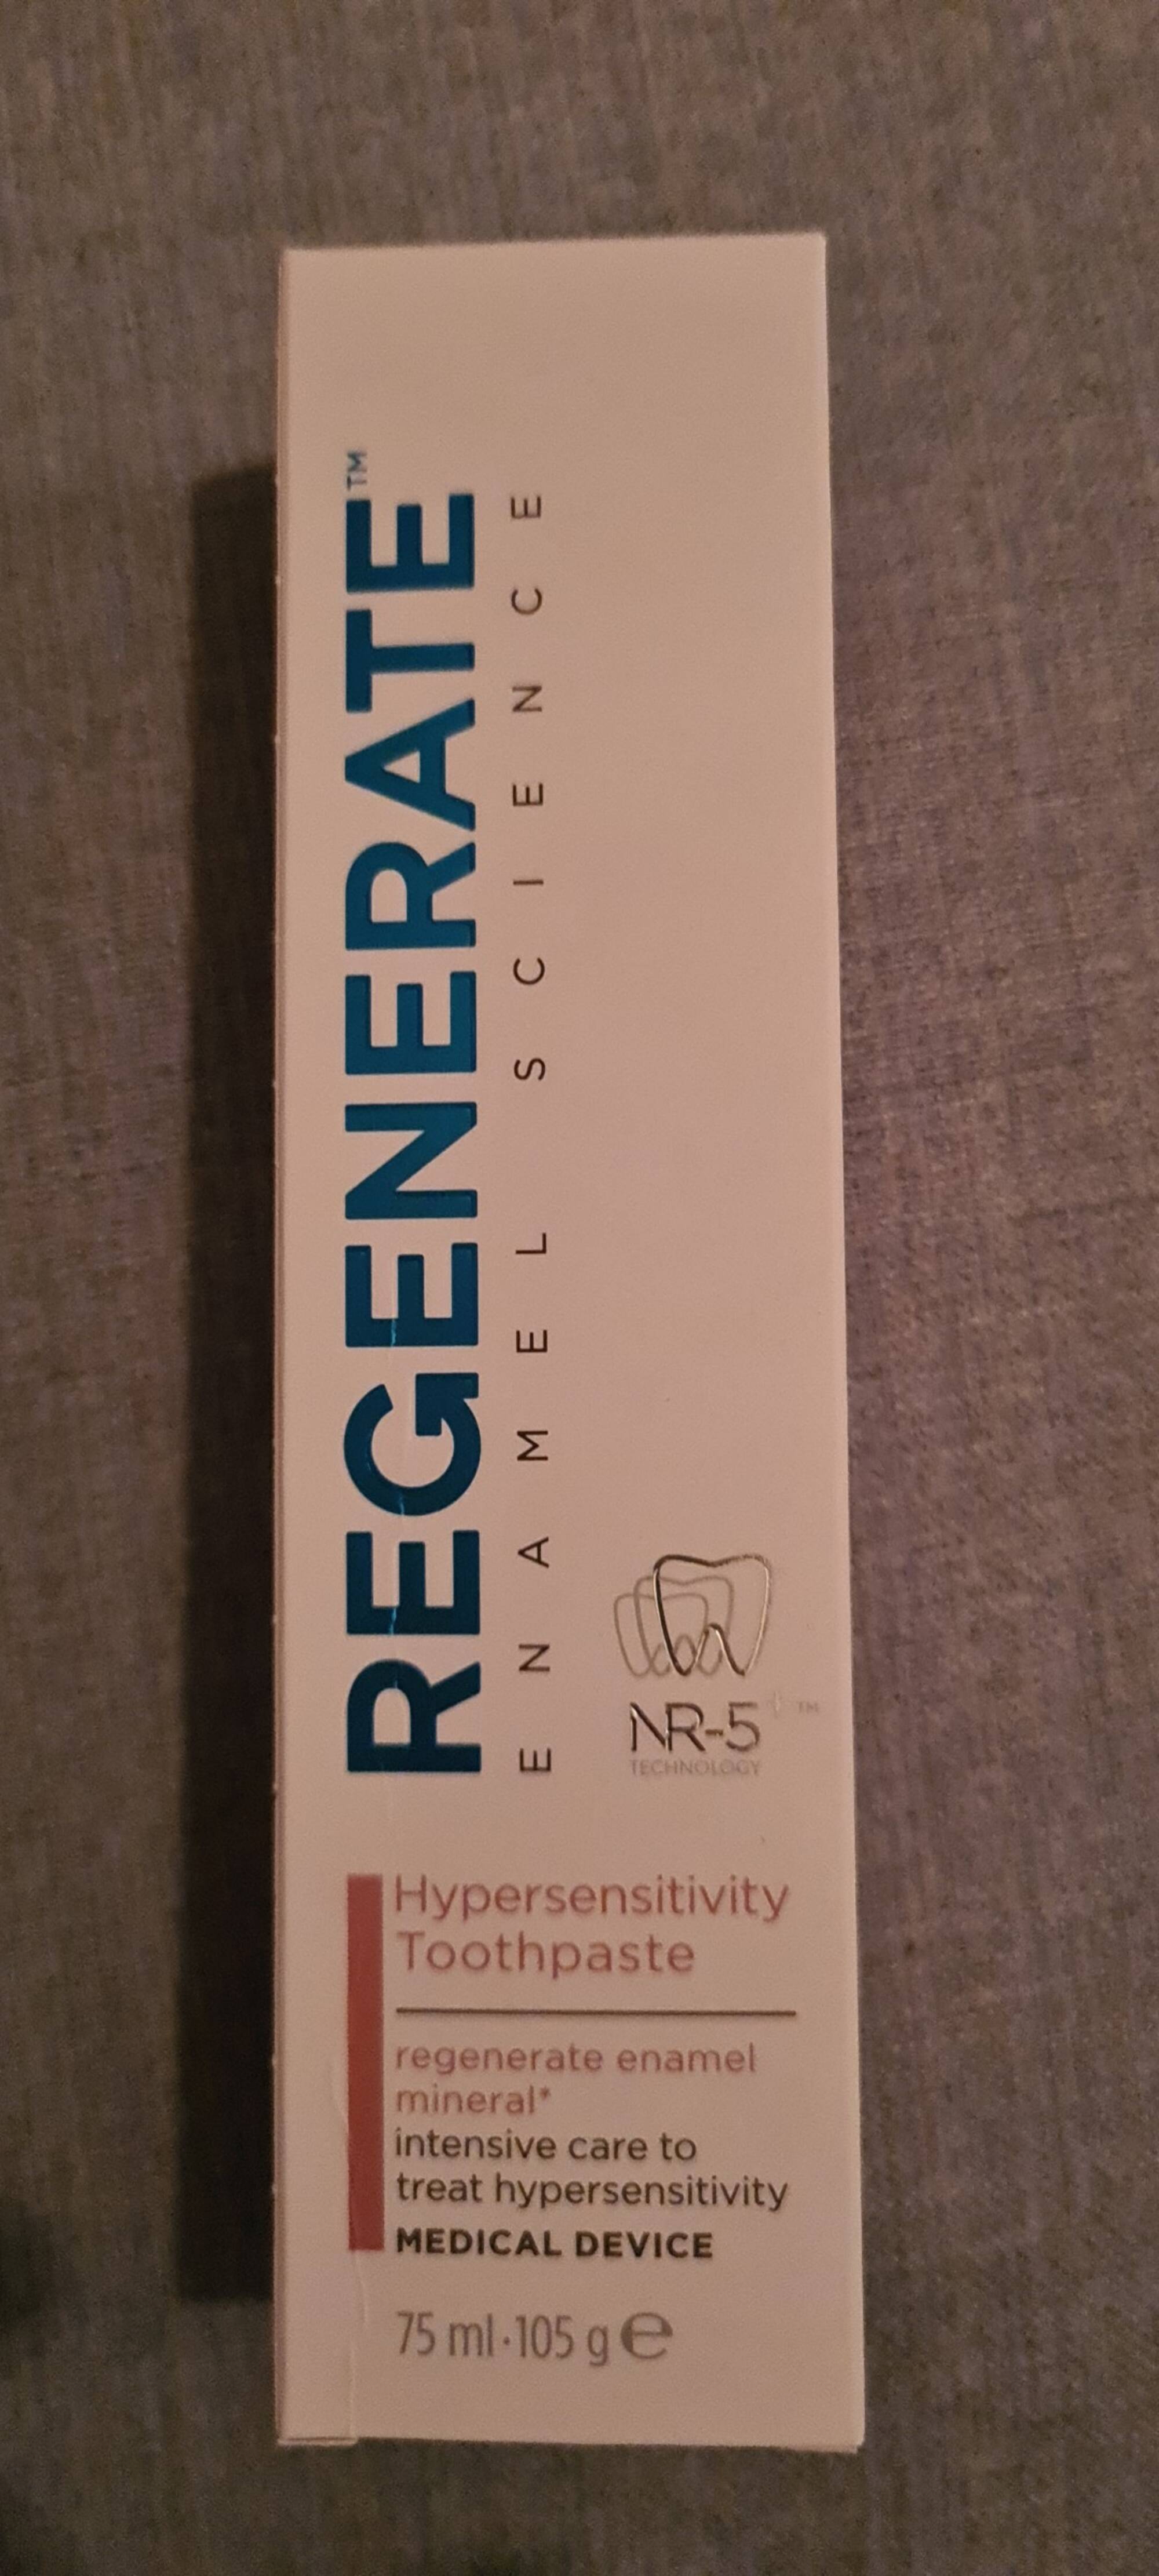 REGENERATE - Hypersensitivity toothpaste 